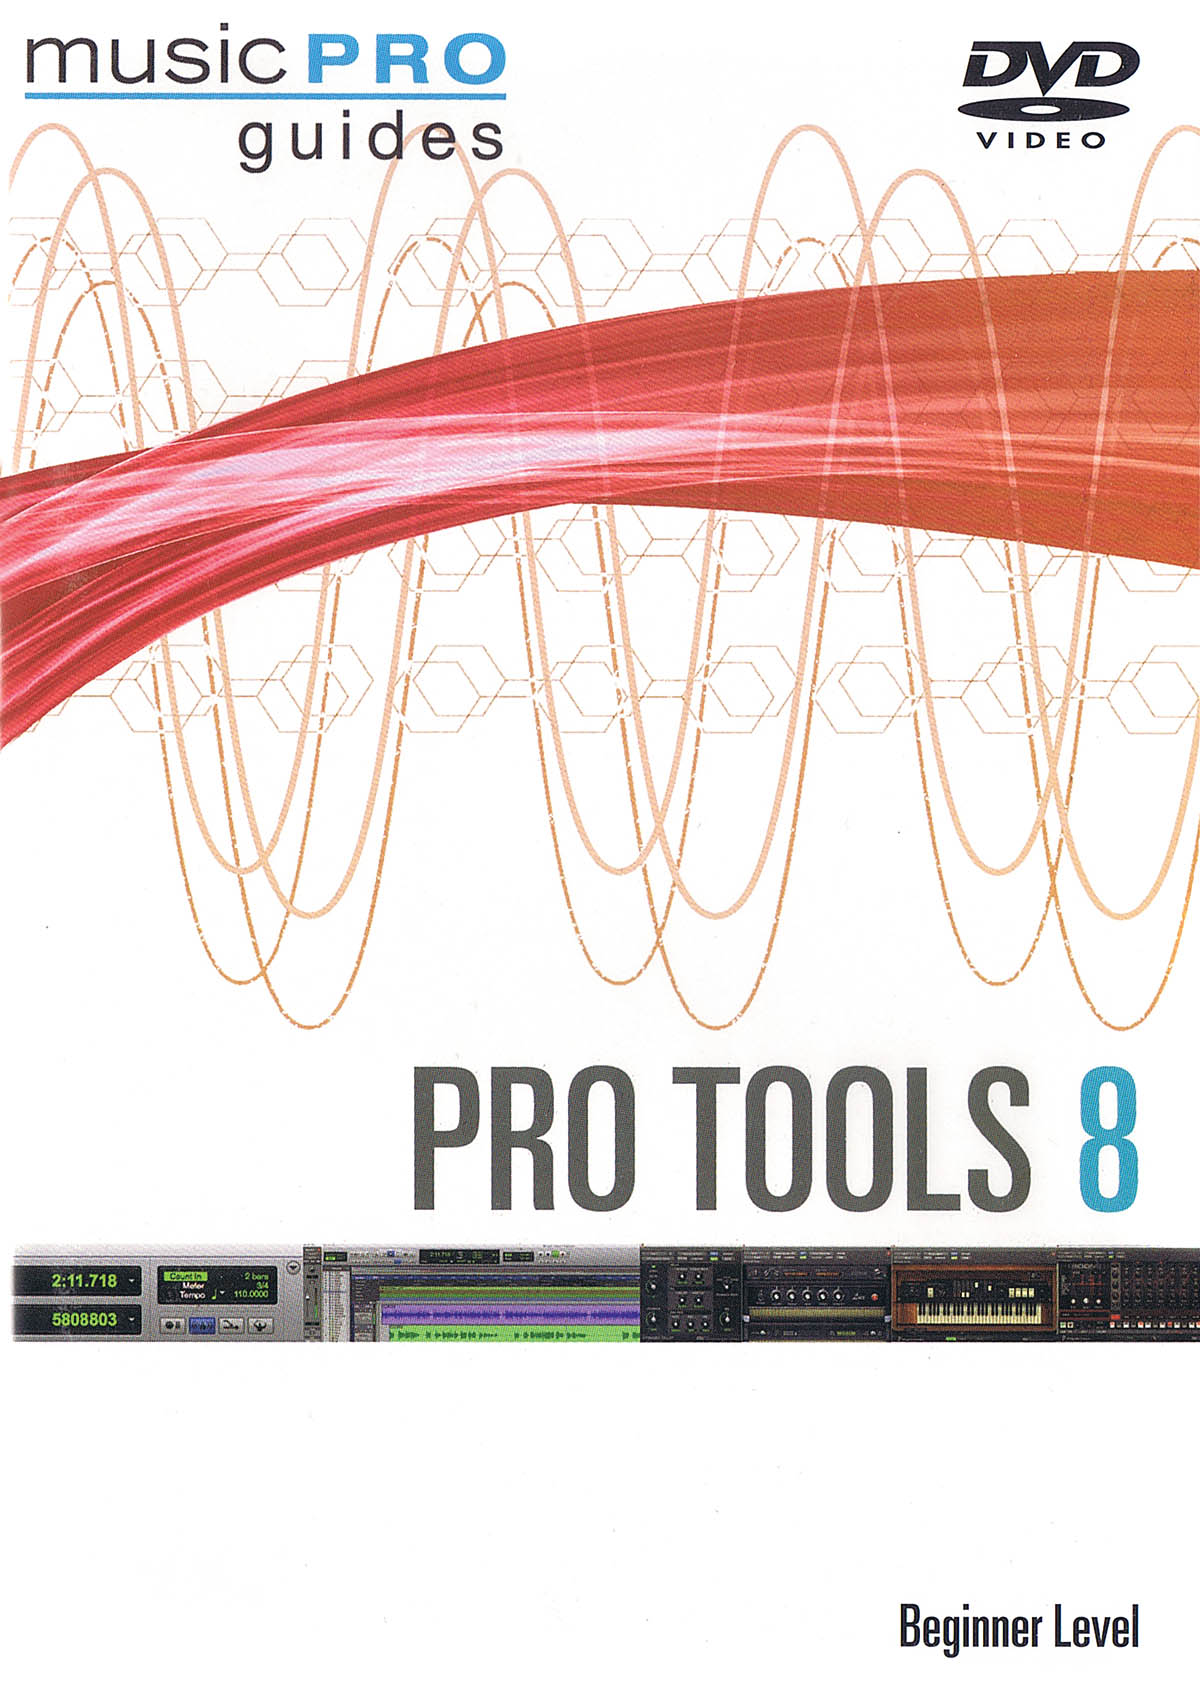 Pro Tools 8 - Beginner Level